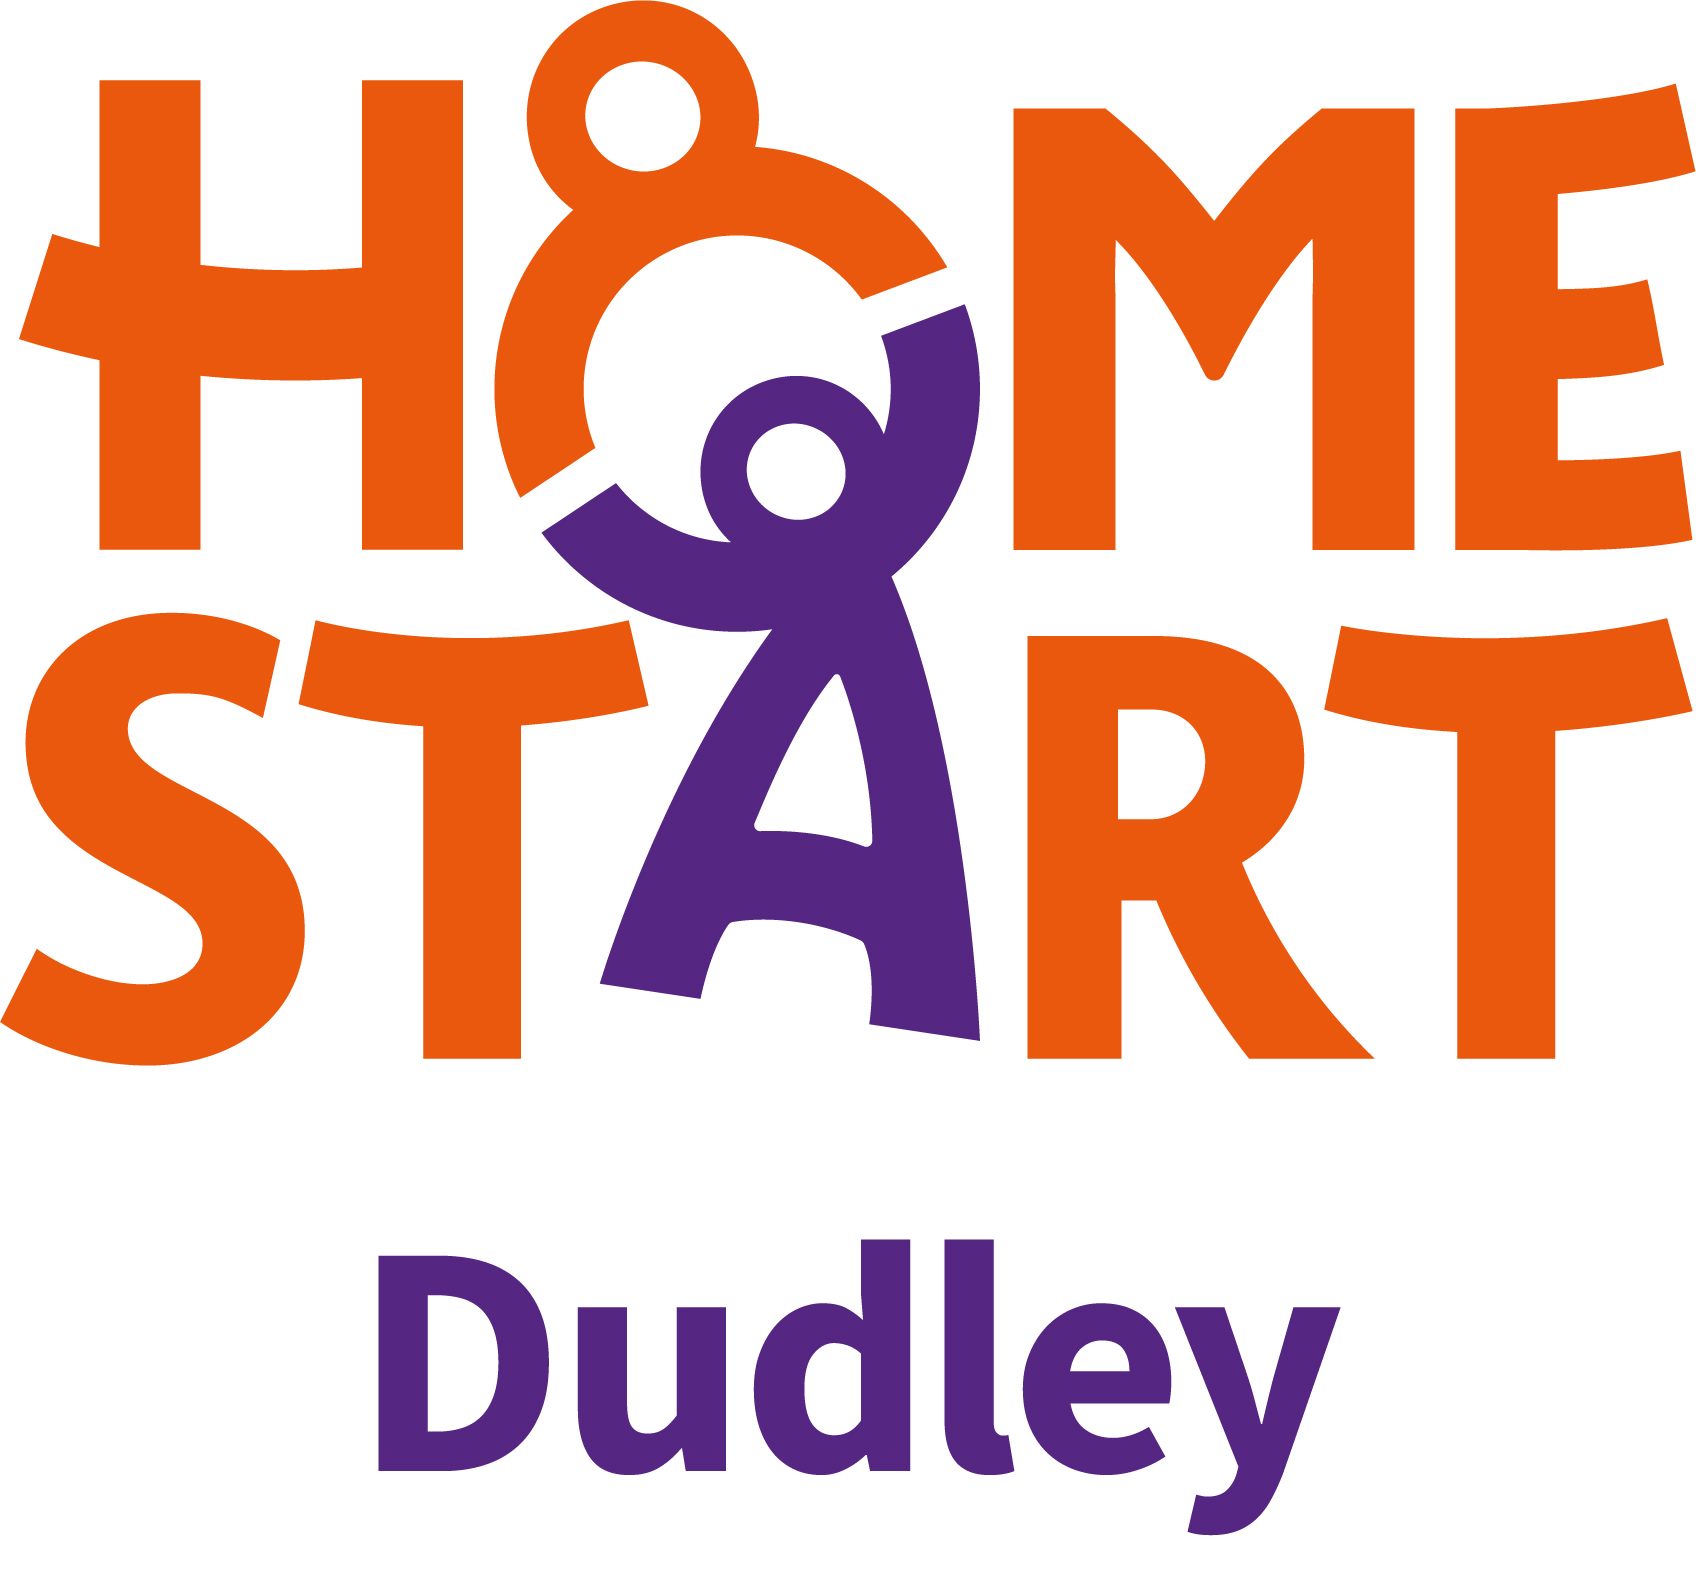 Home Start Dudley